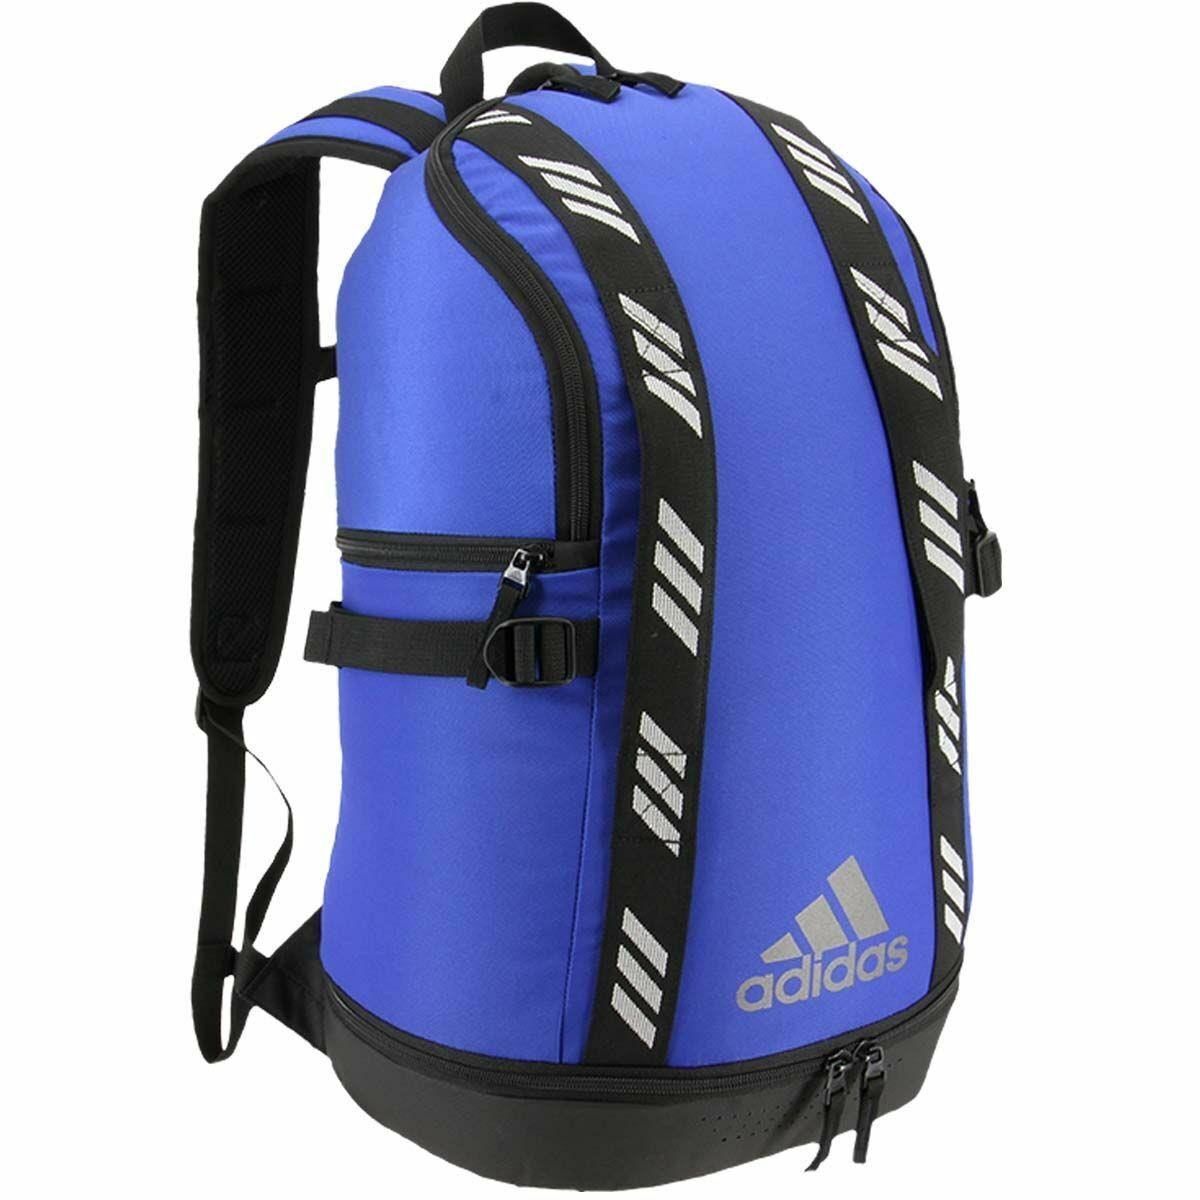 Adidas Creator 365 Backpack Bold Blue Unisex Sports Soccer Basketball